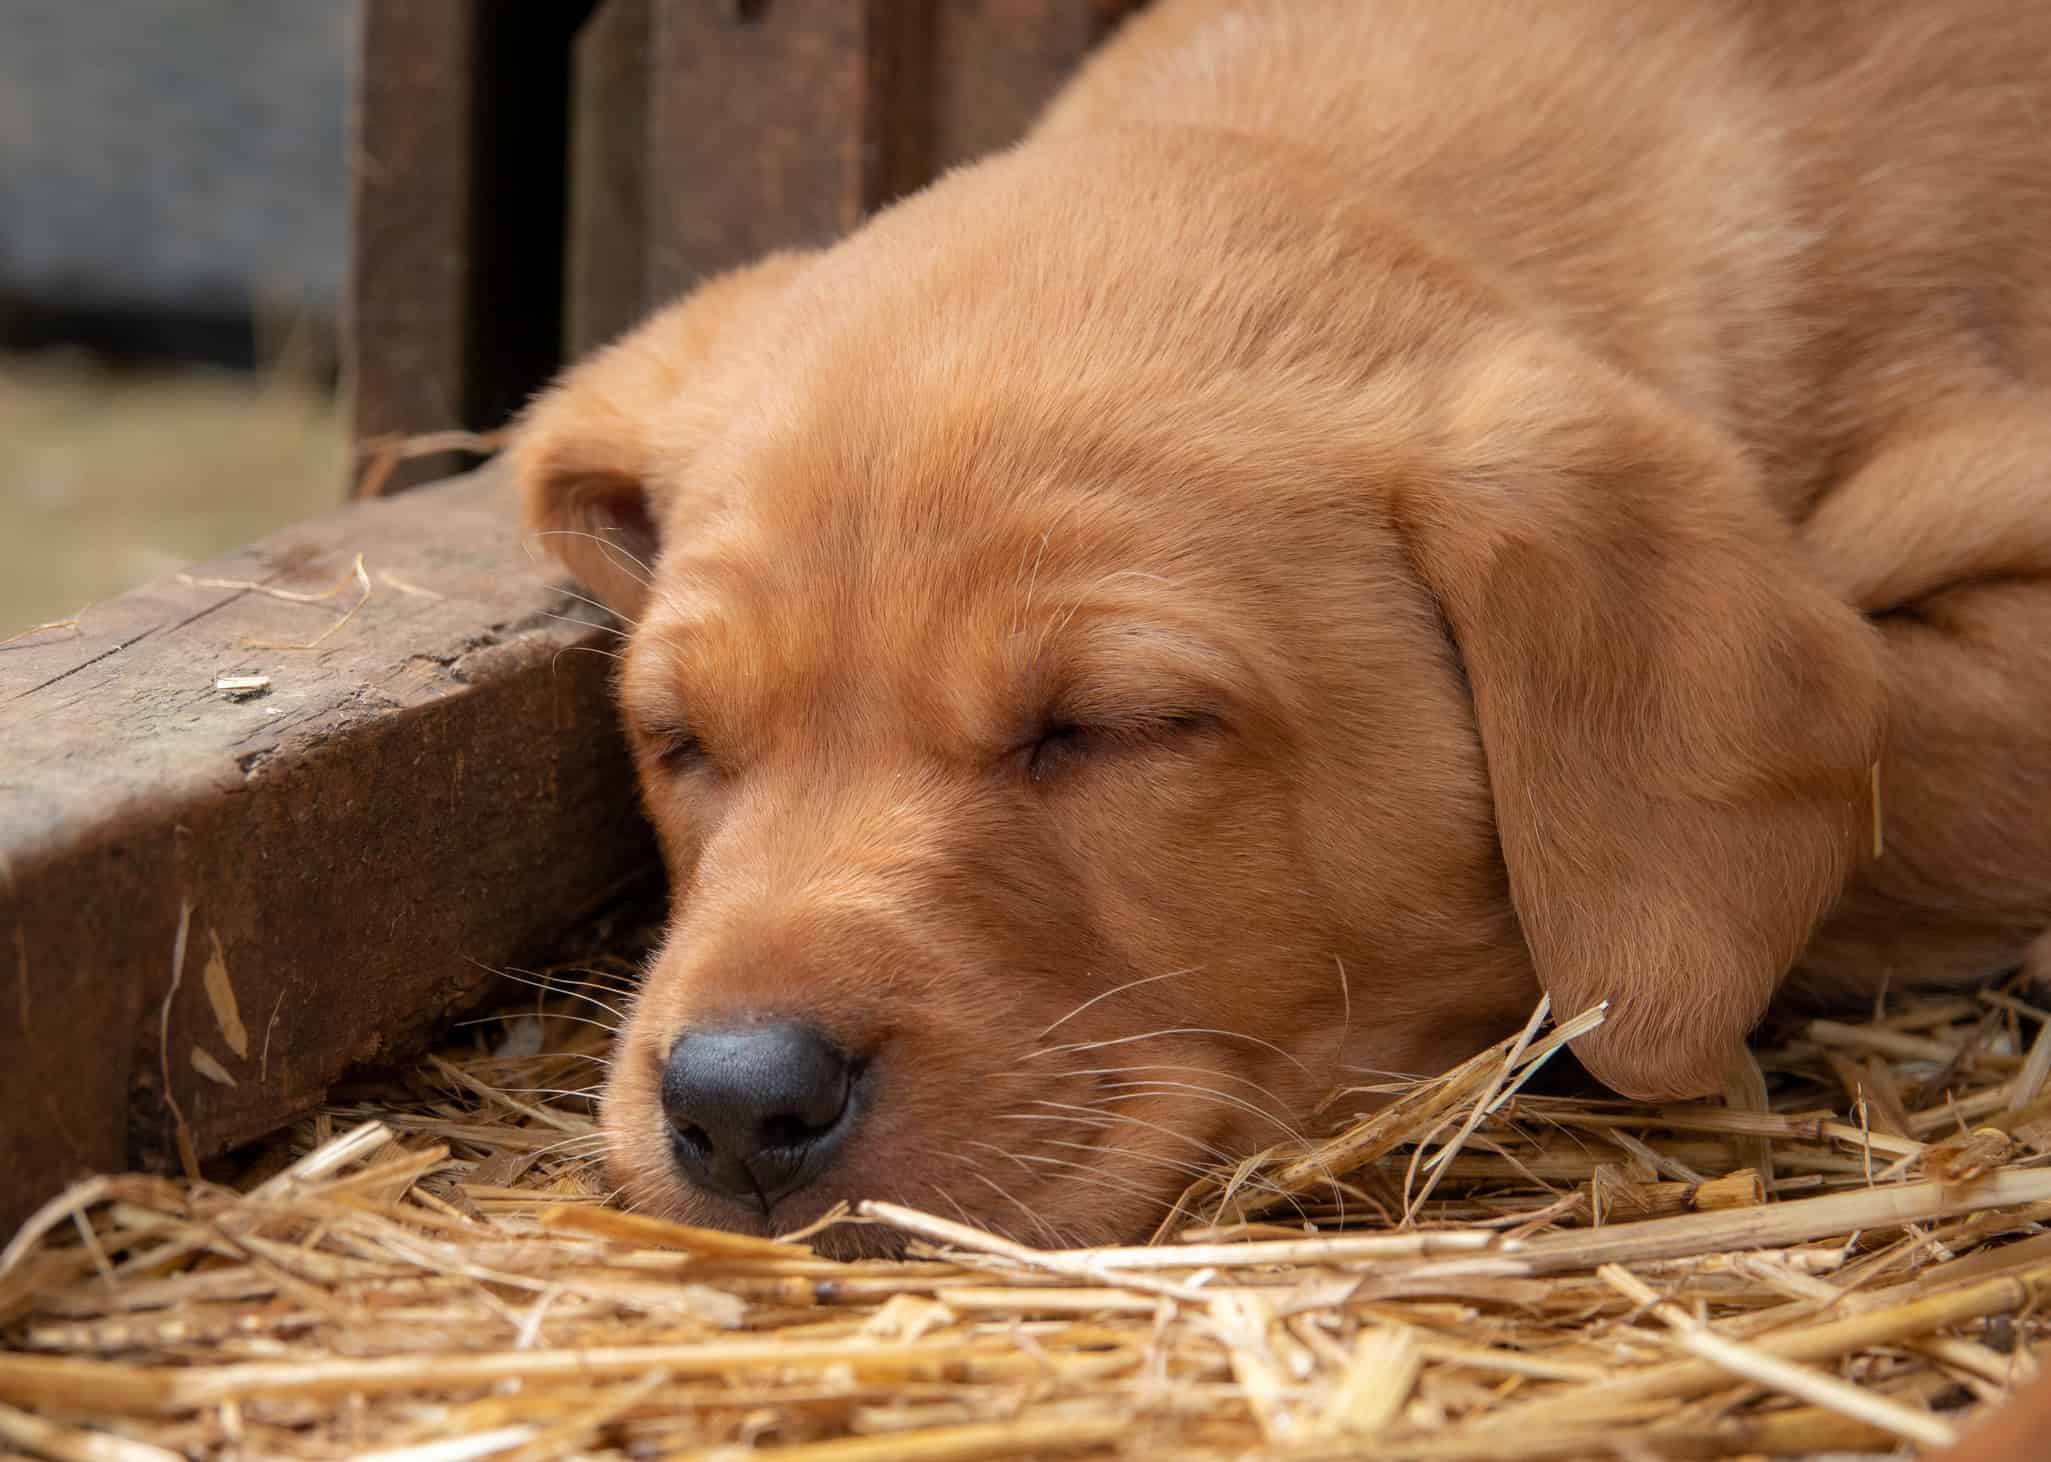 Puppy Labrador fast asleep.